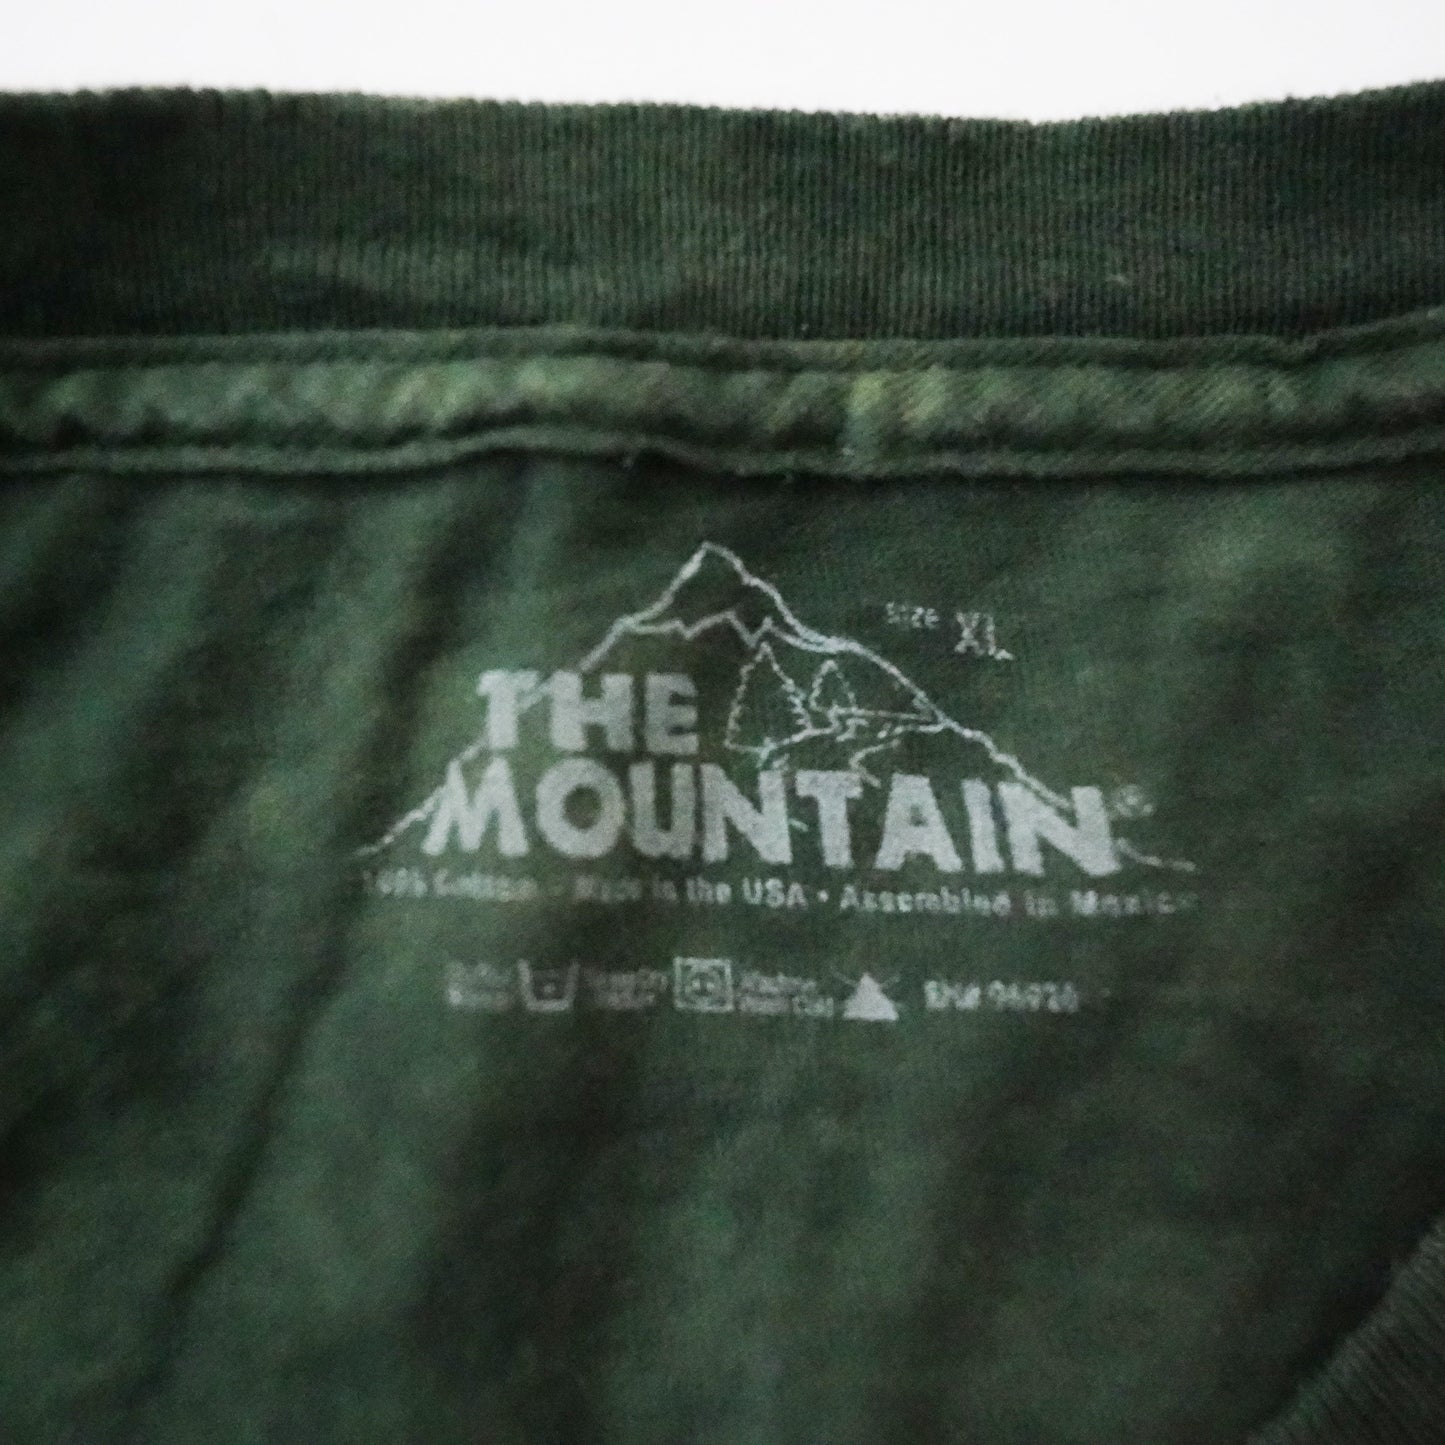 THE MOUNTAIN tee